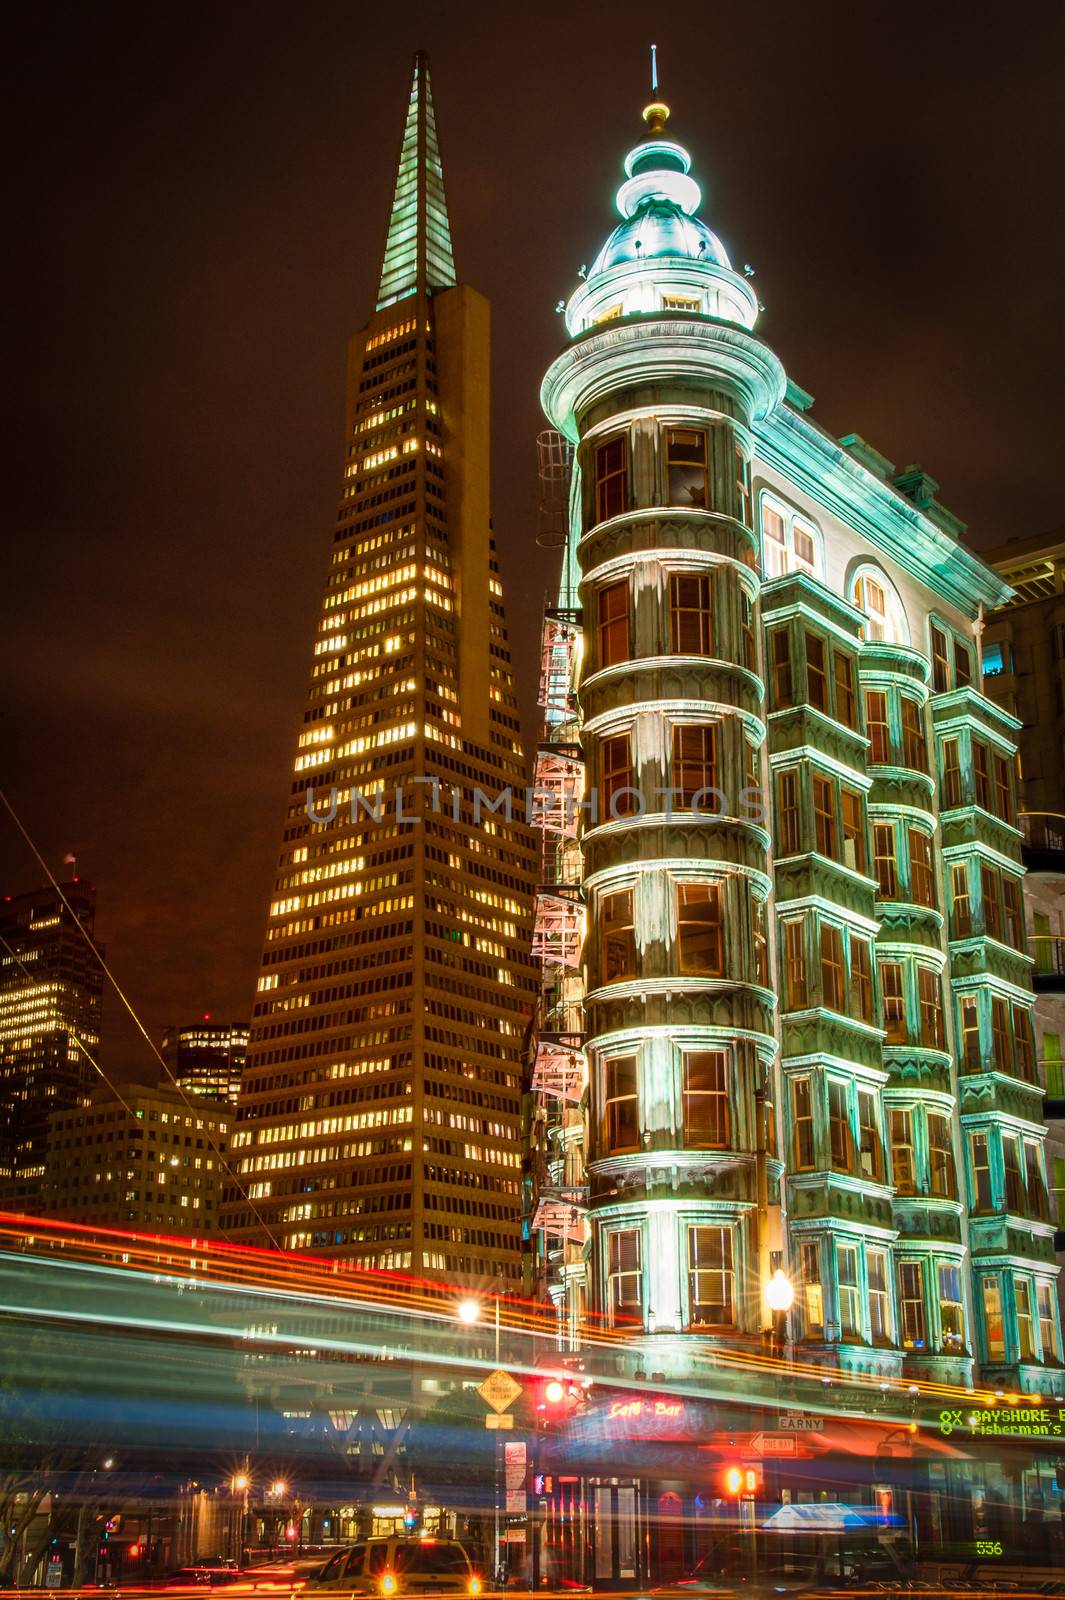 Buildings lit up at night in a city, Columbus Tower, Transamerica Pyramid, San Francisco, California, USA